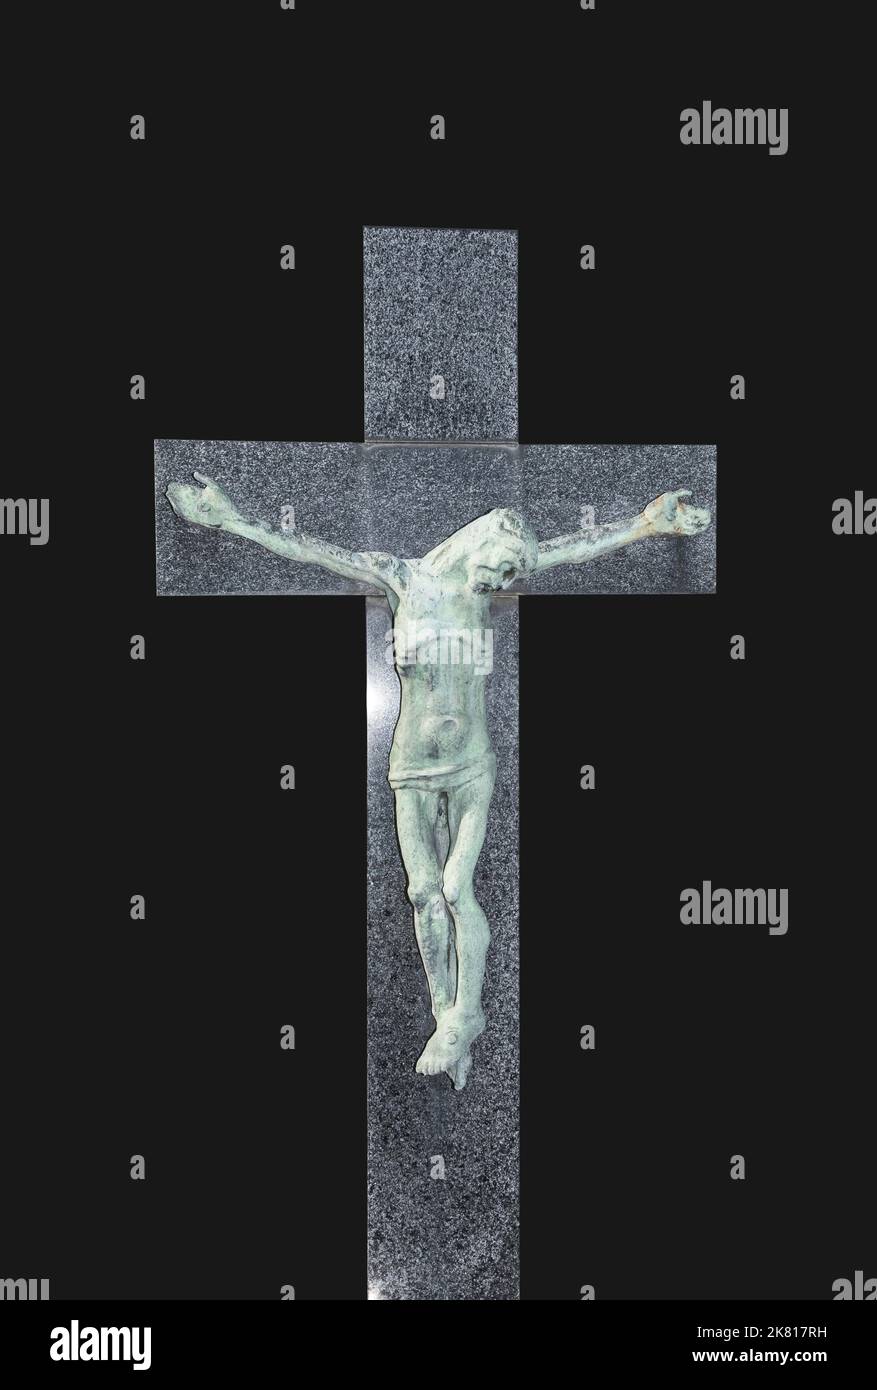 Jesus Christ on the cross sculpture Stock Photo